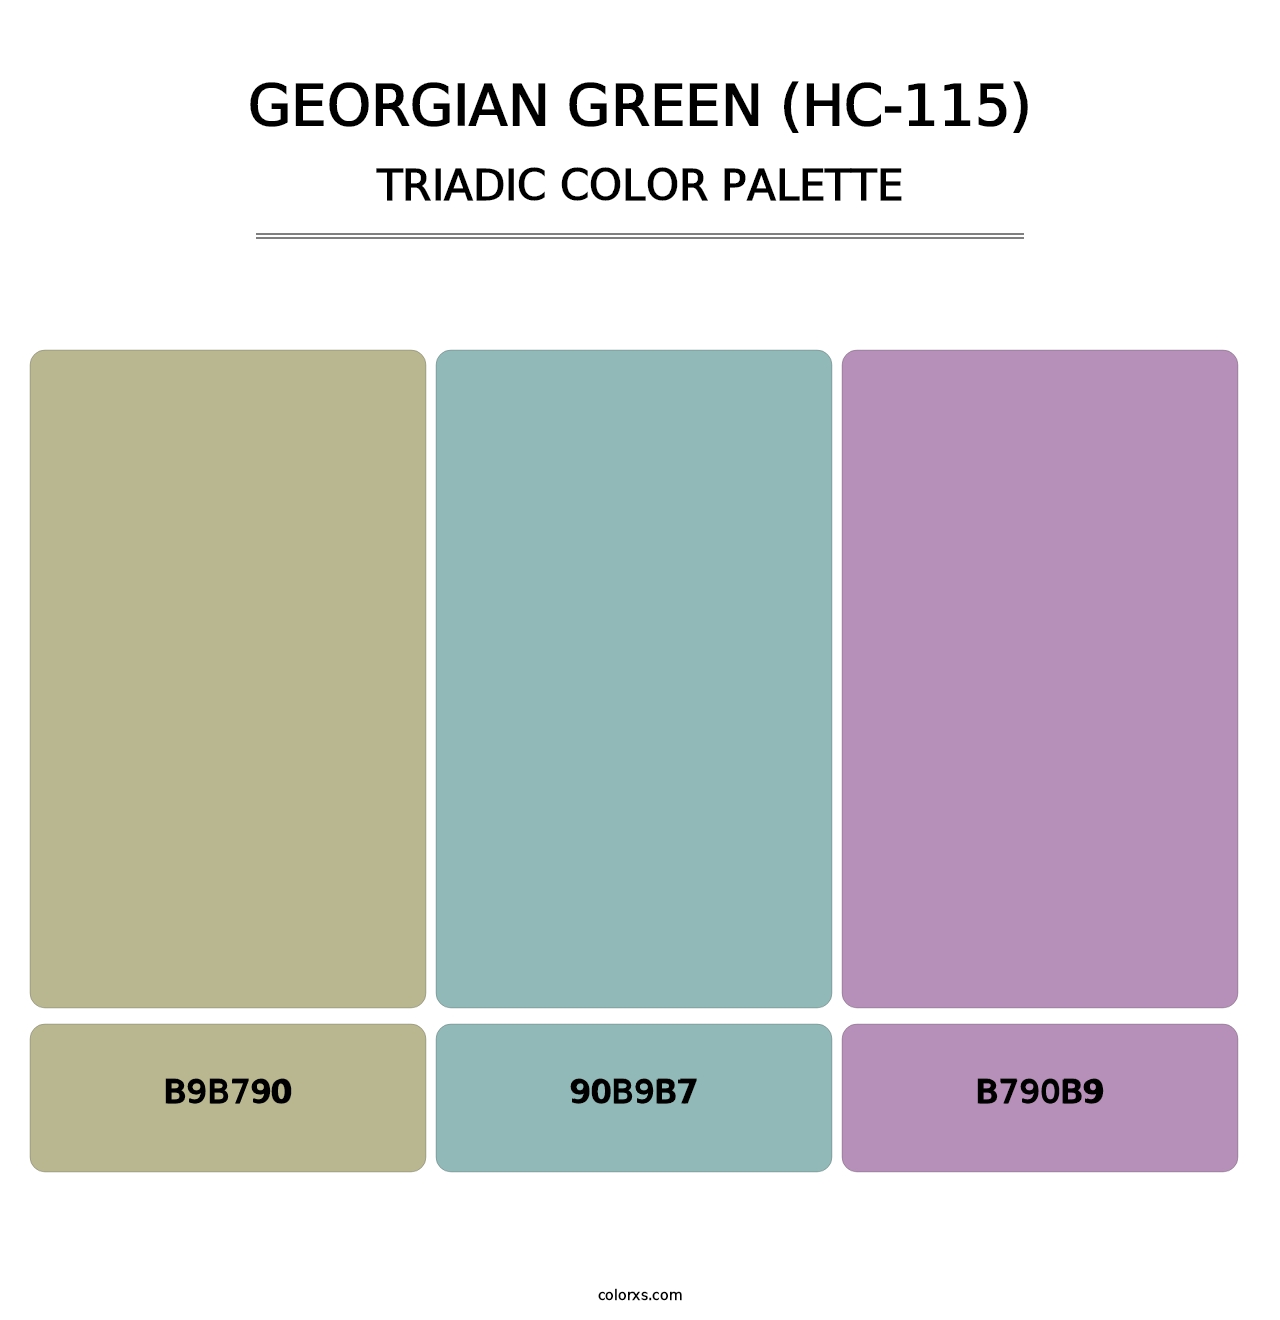 Georgian Green (HC-115) - Triadic Color Palette